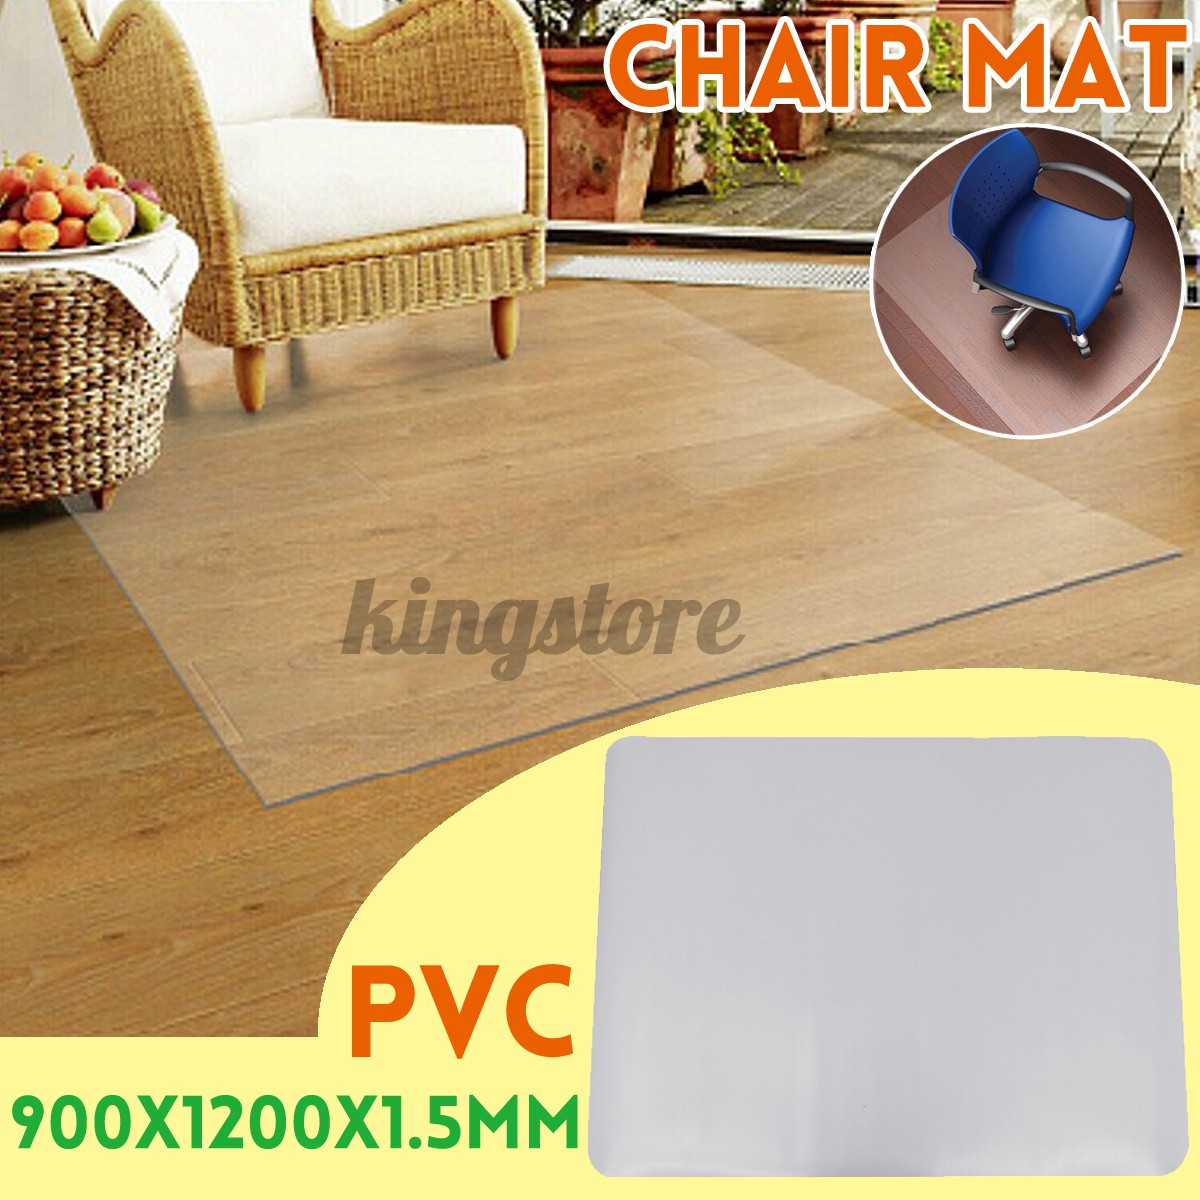 1200X900 Carpet Timber Tile Floor Chair Mat Office Work Chairmat Protector